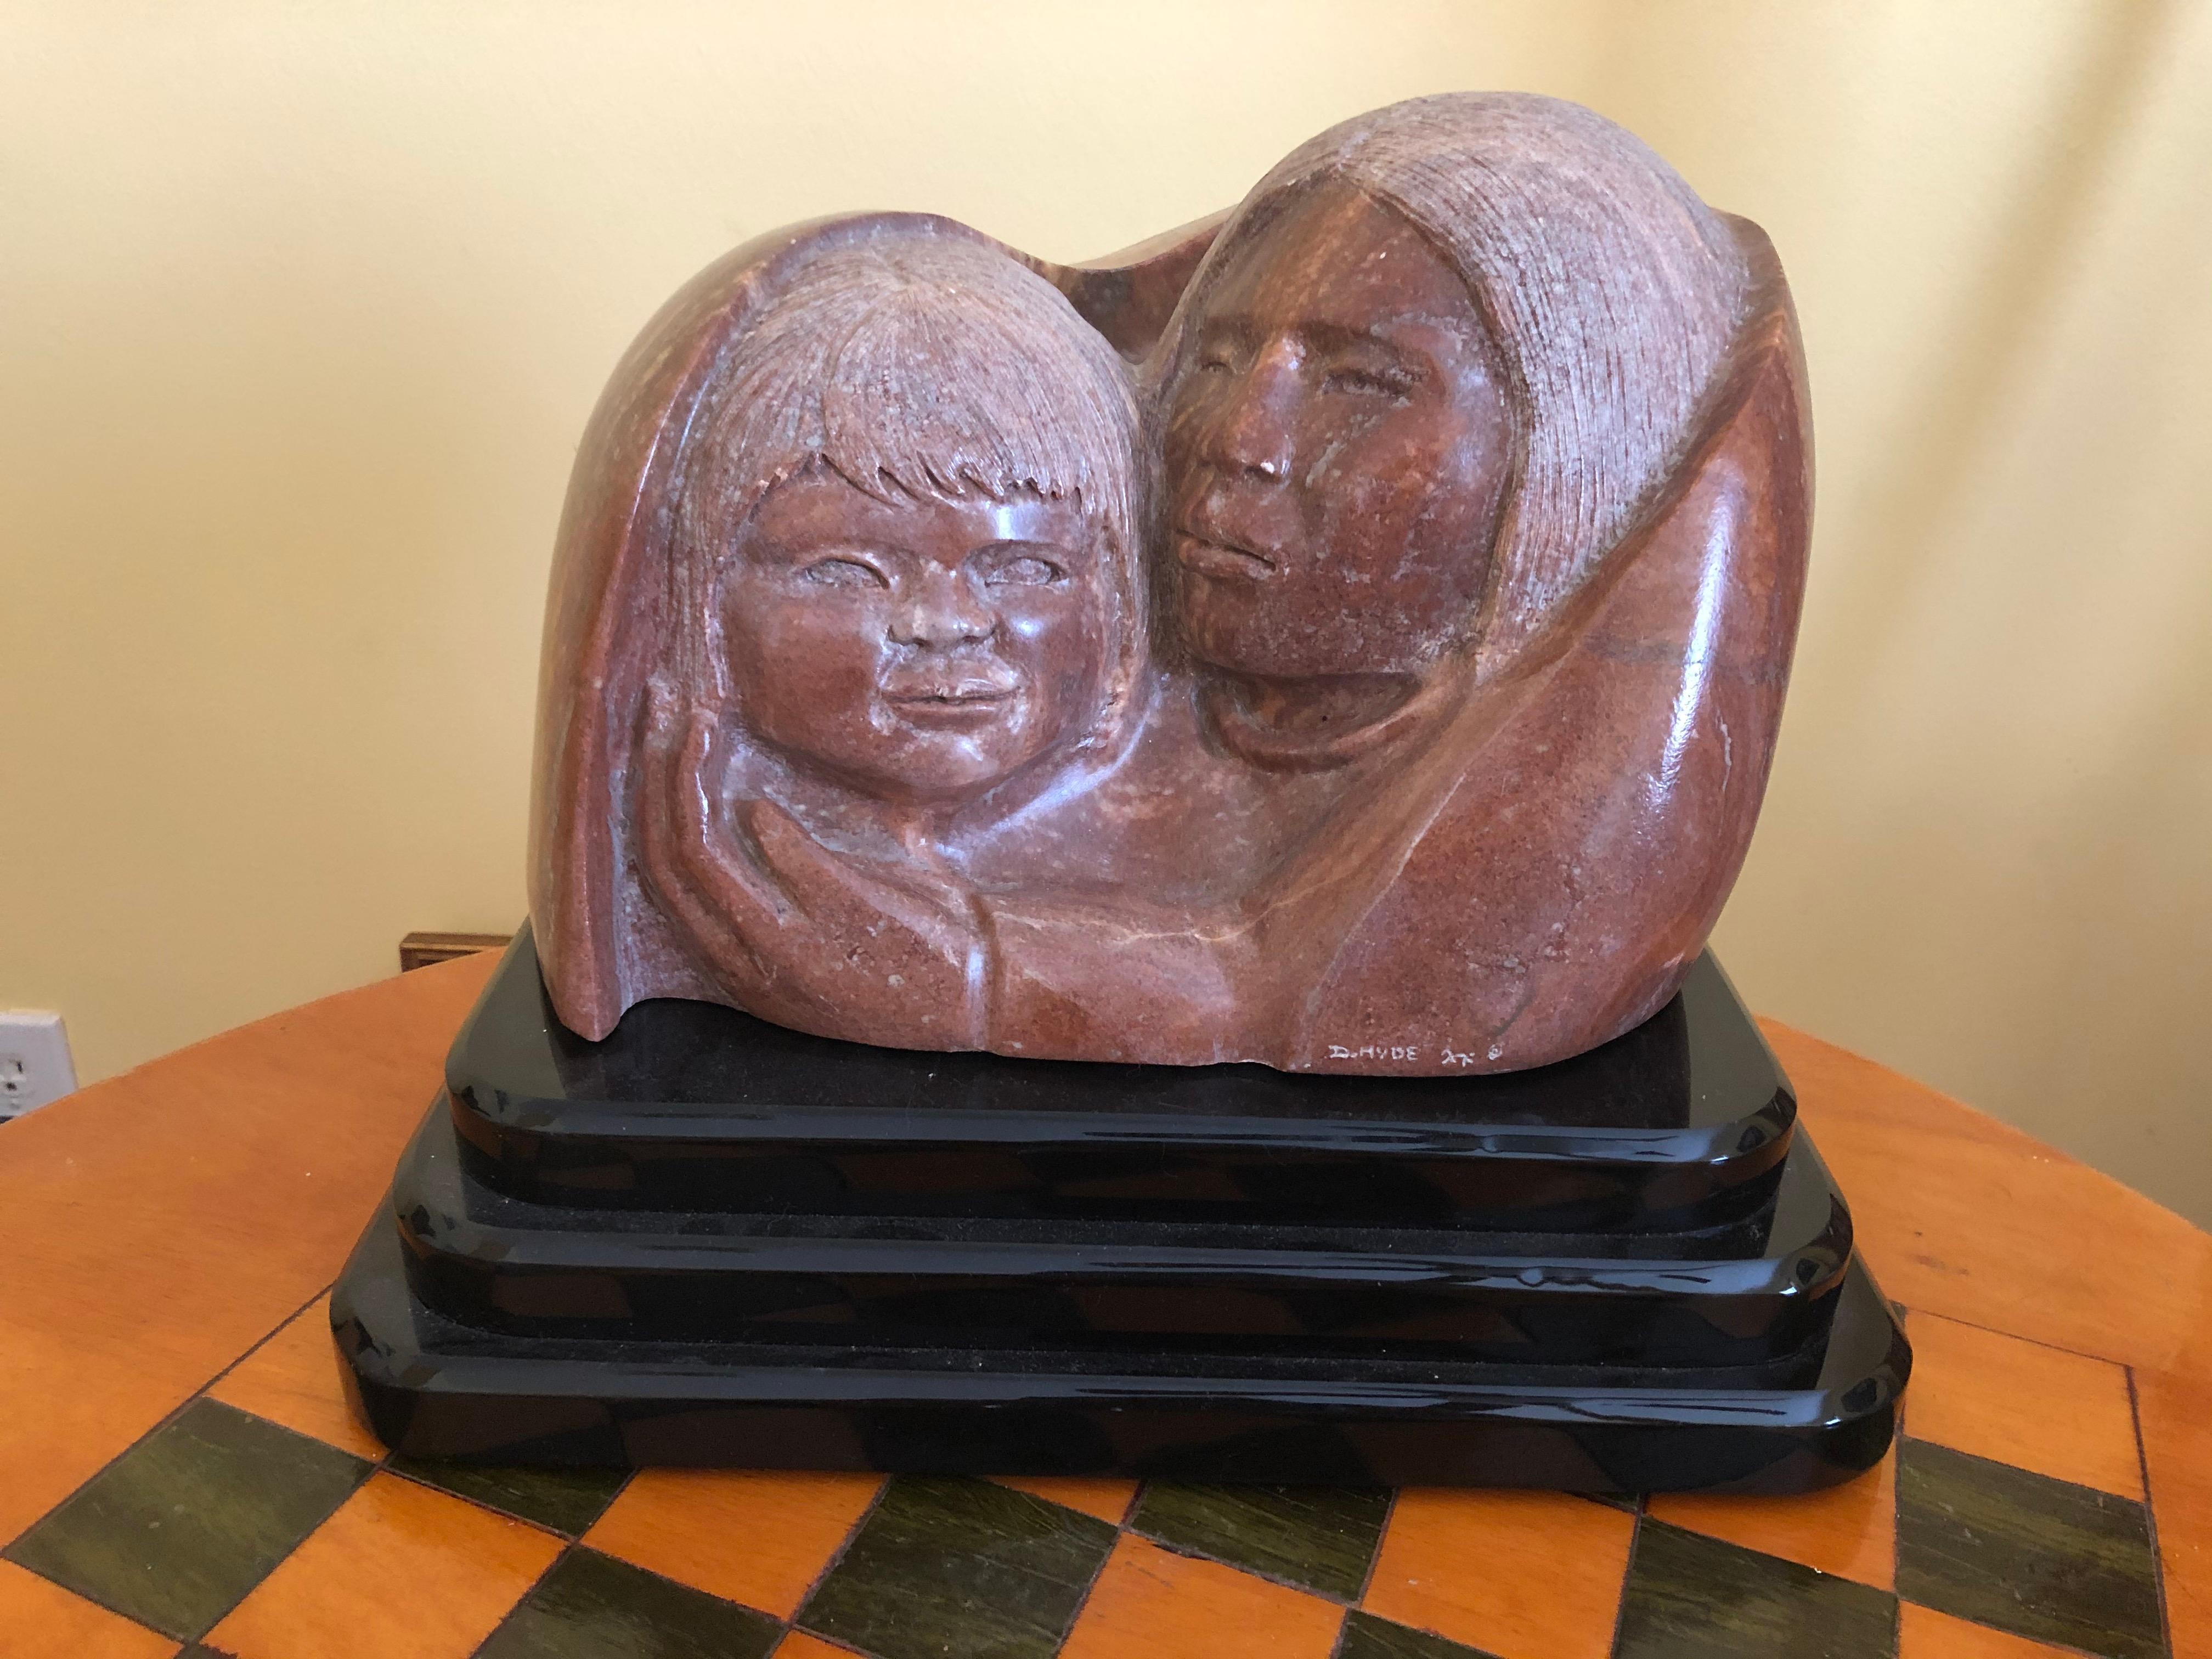 doug hyde sculptures for sale